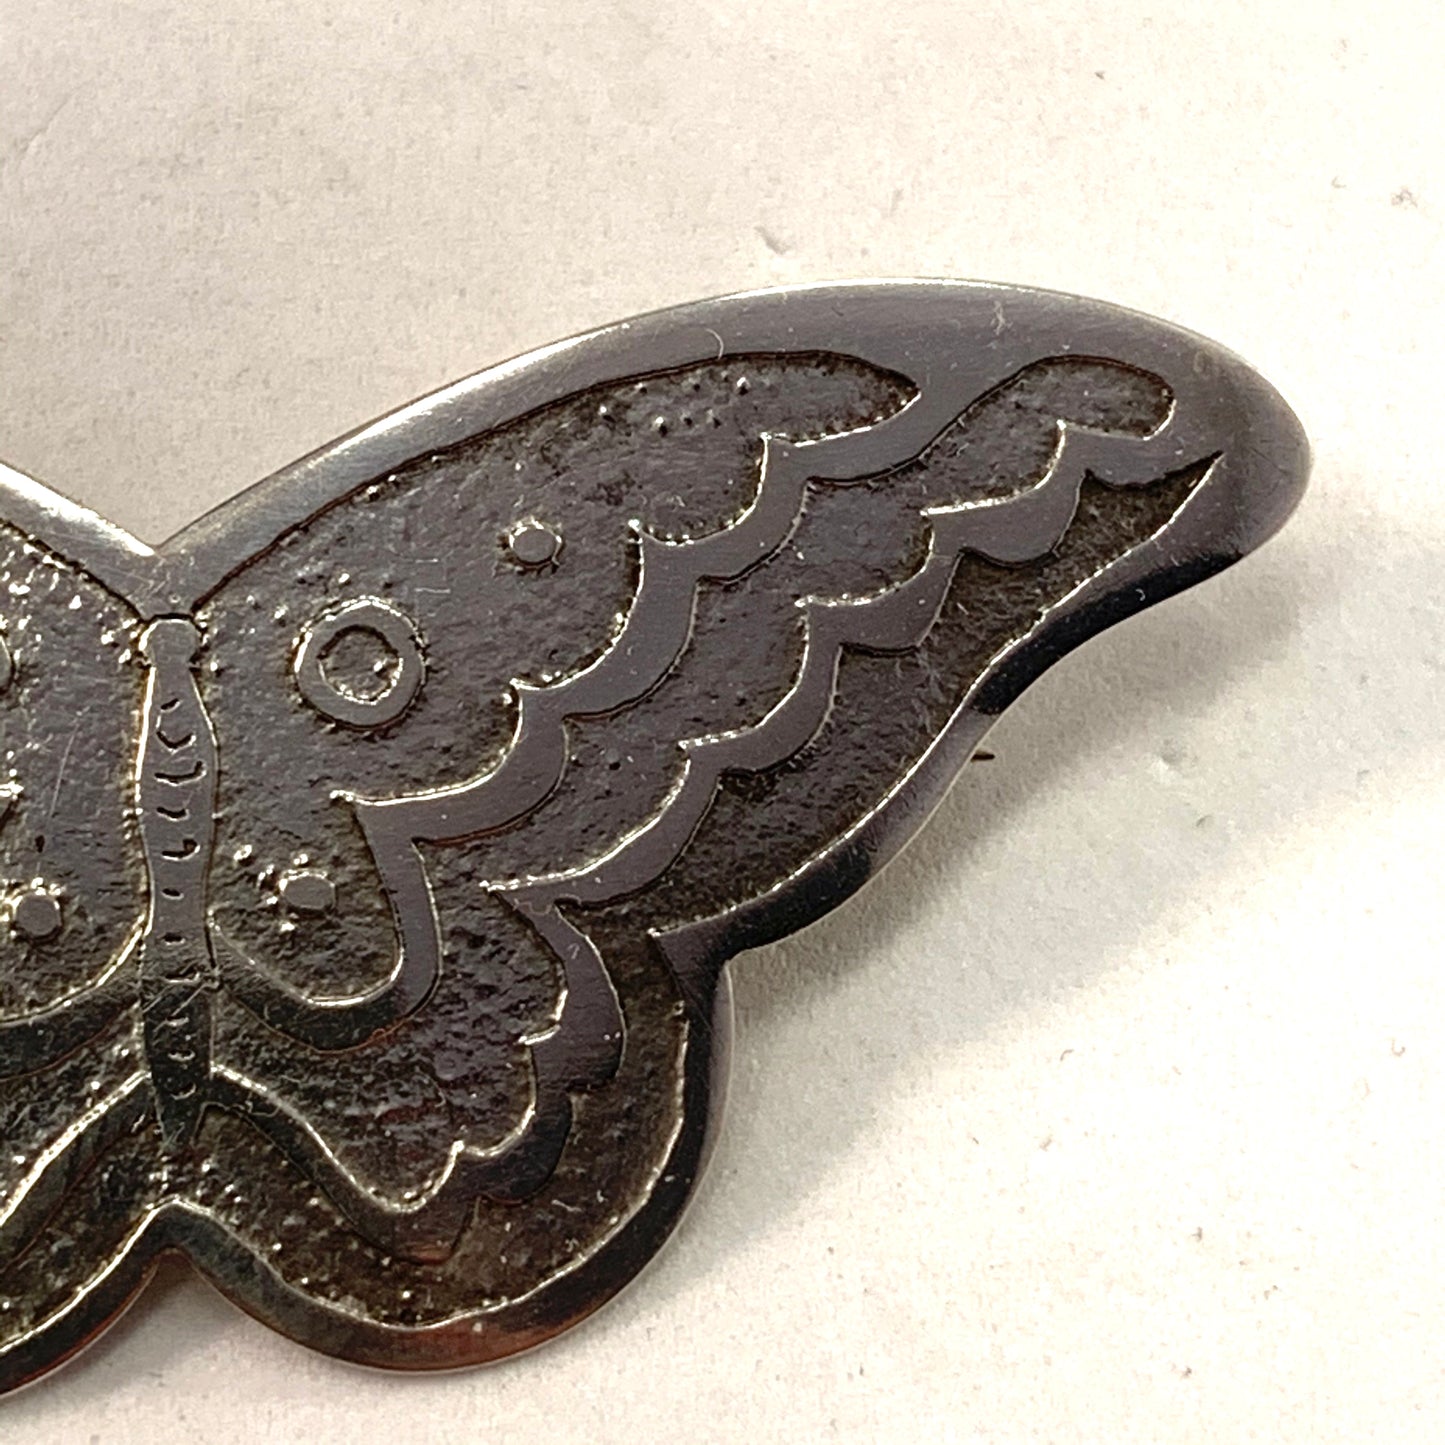 A Nilsson, father of Wiwen Nilsson, Sweden year 1905 Antique Art Nouveau Butterfly Brooch.